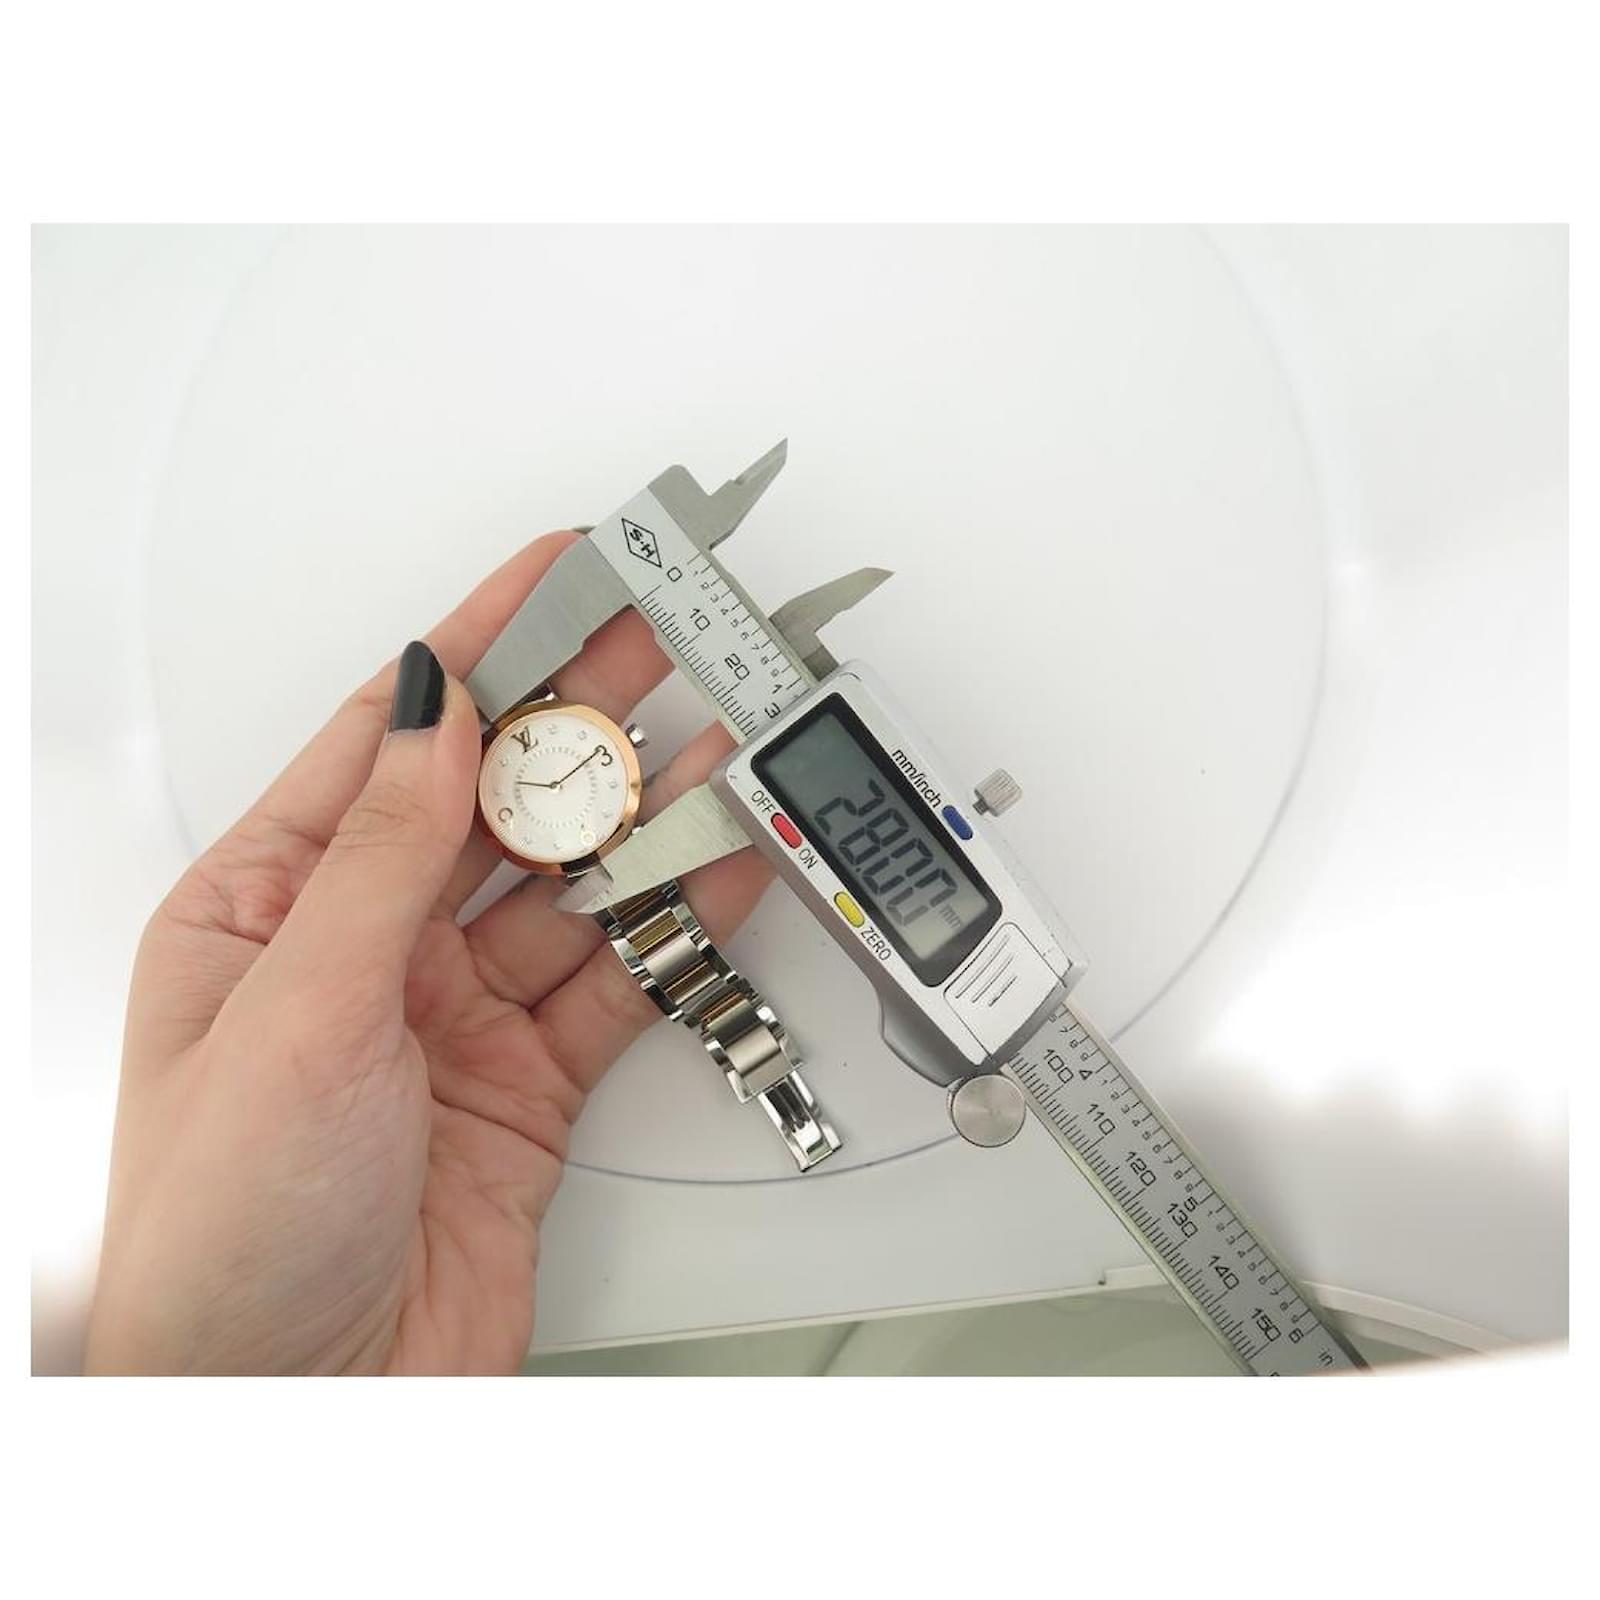 Reloj Louis Vuitton De Dama Original Acero Inoxidable $12000 -  acerojoyasmexs jimdo page!